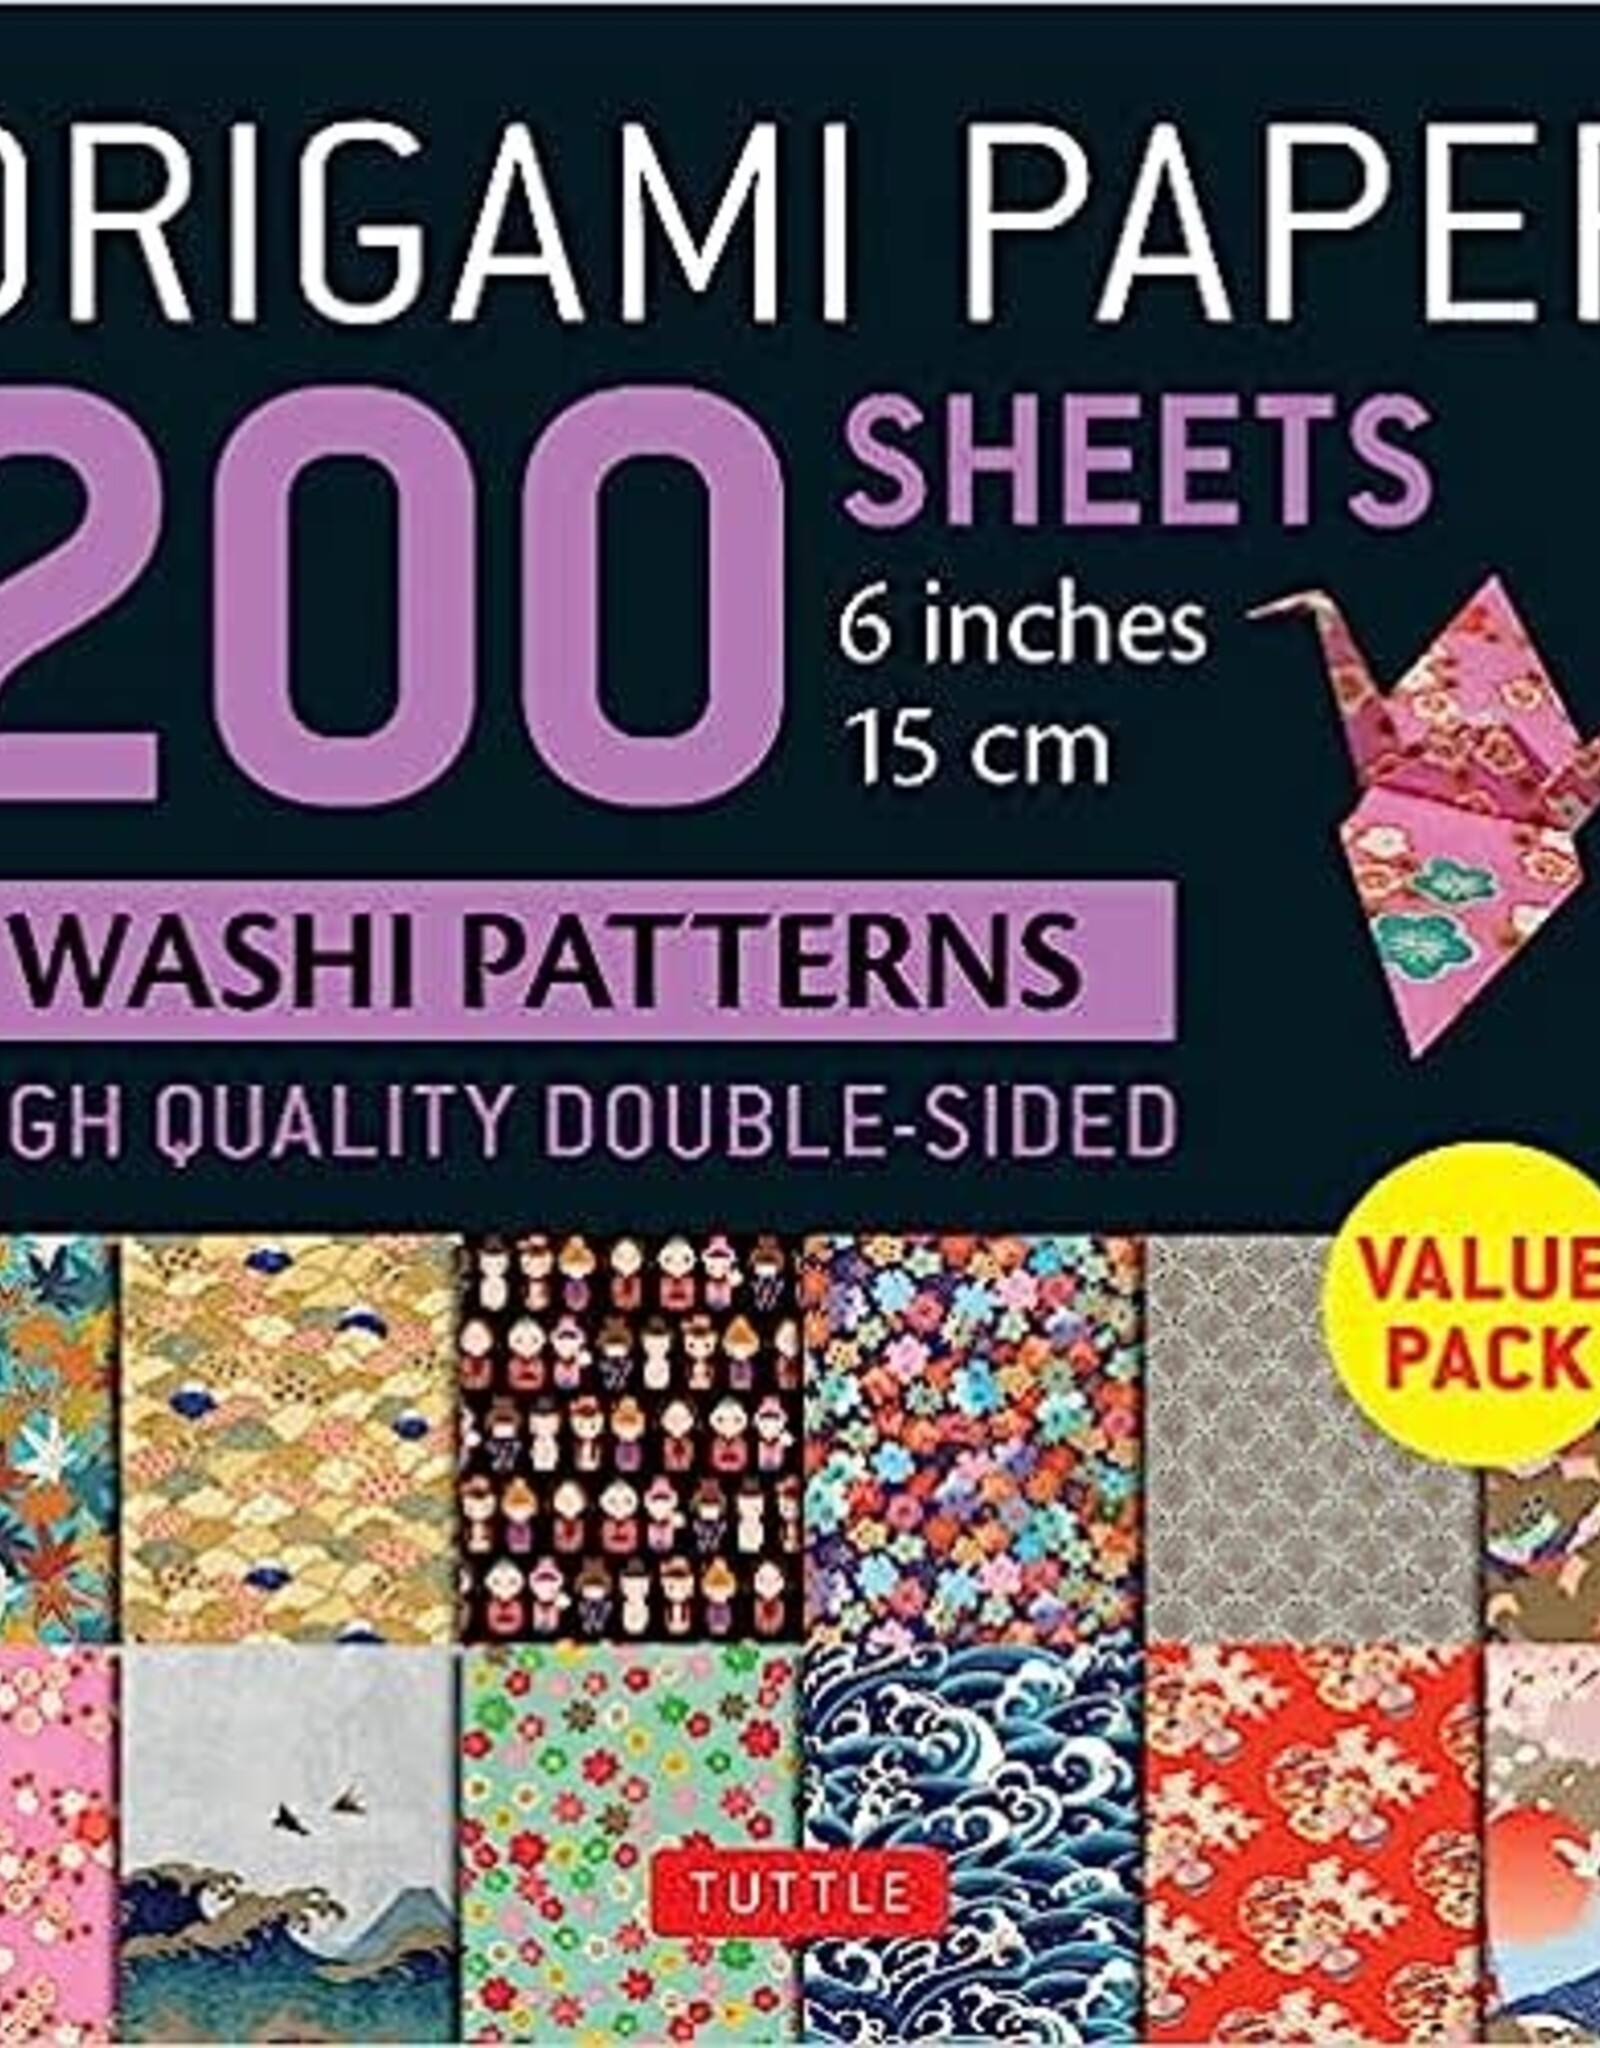 Origami Paper Sheets Washi Pattern 200 Sheets